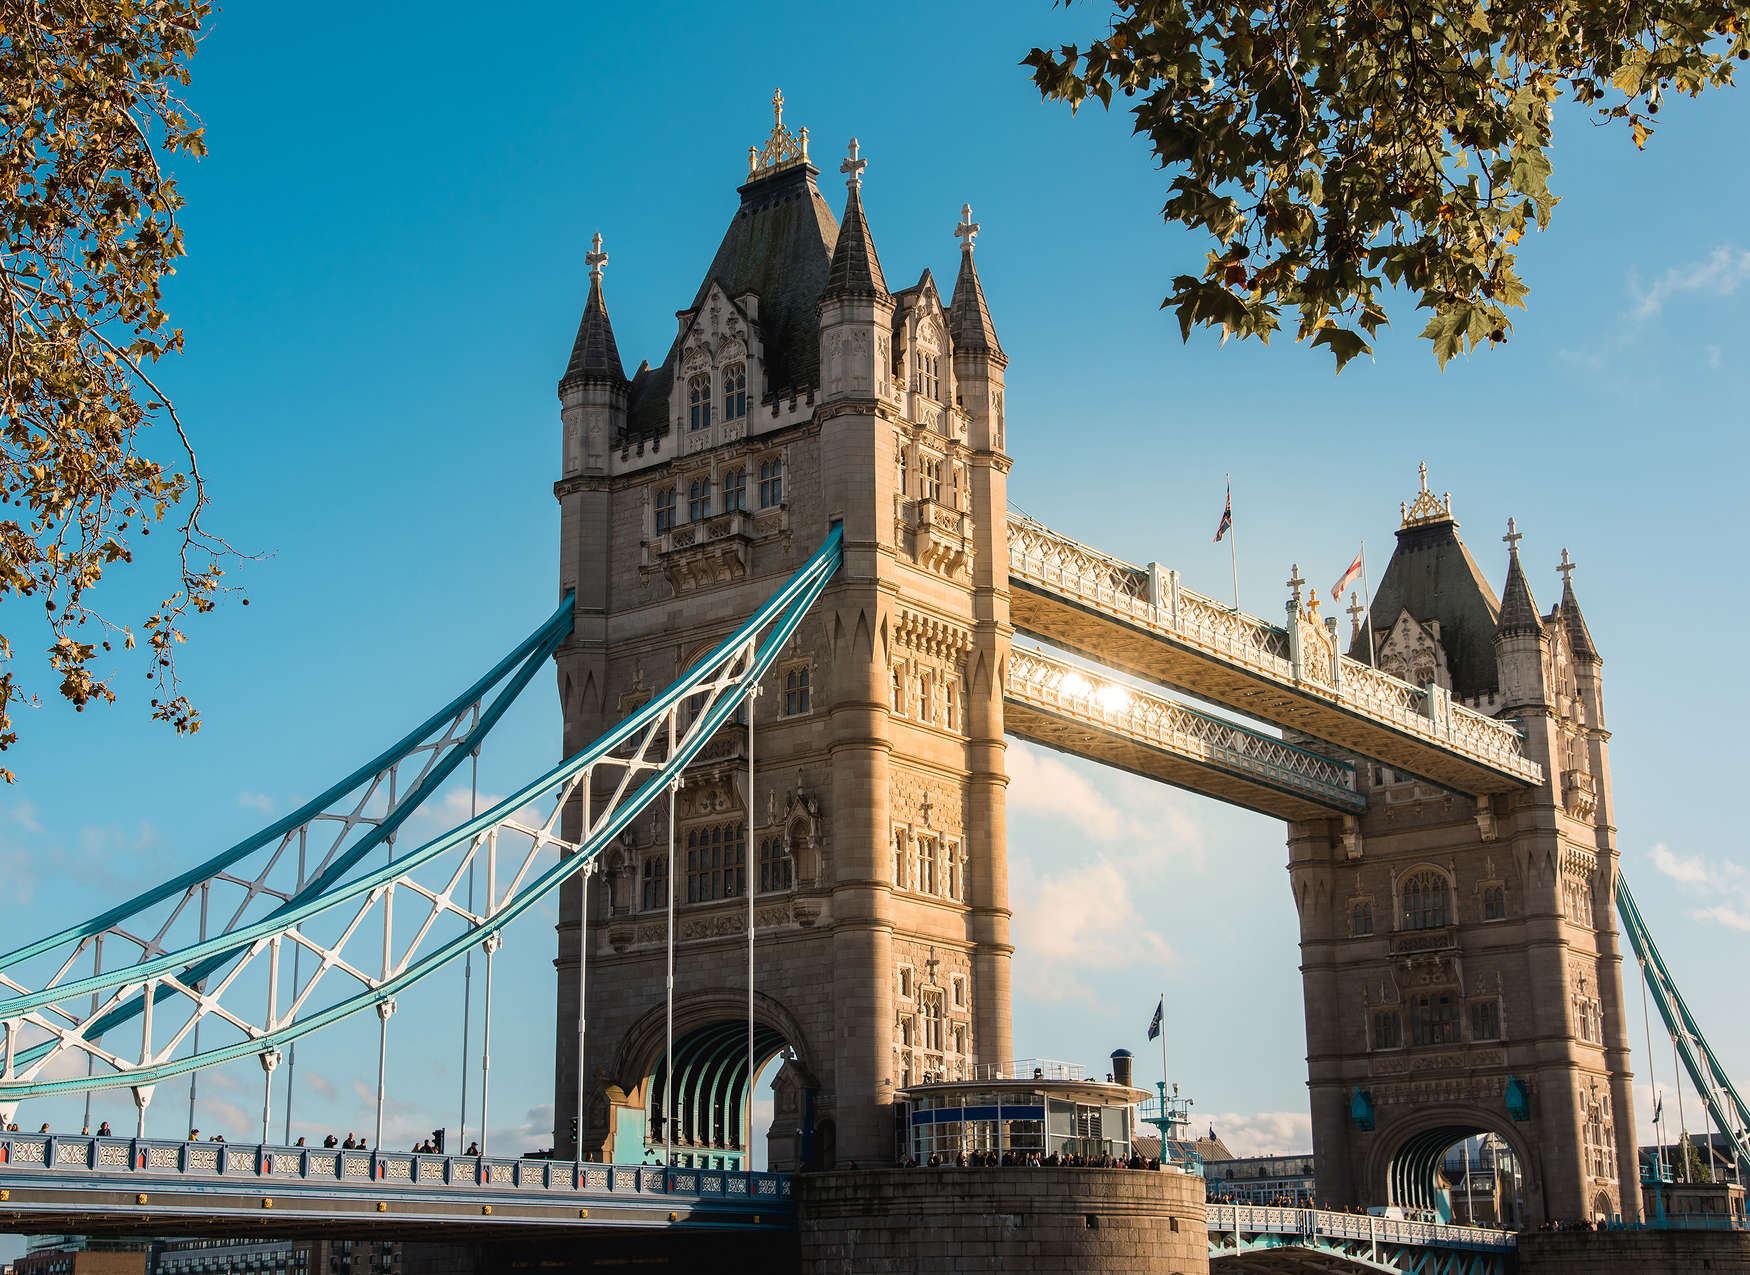             Digital behang met London Bridge in zonnig weer - Blauw, Beige
        